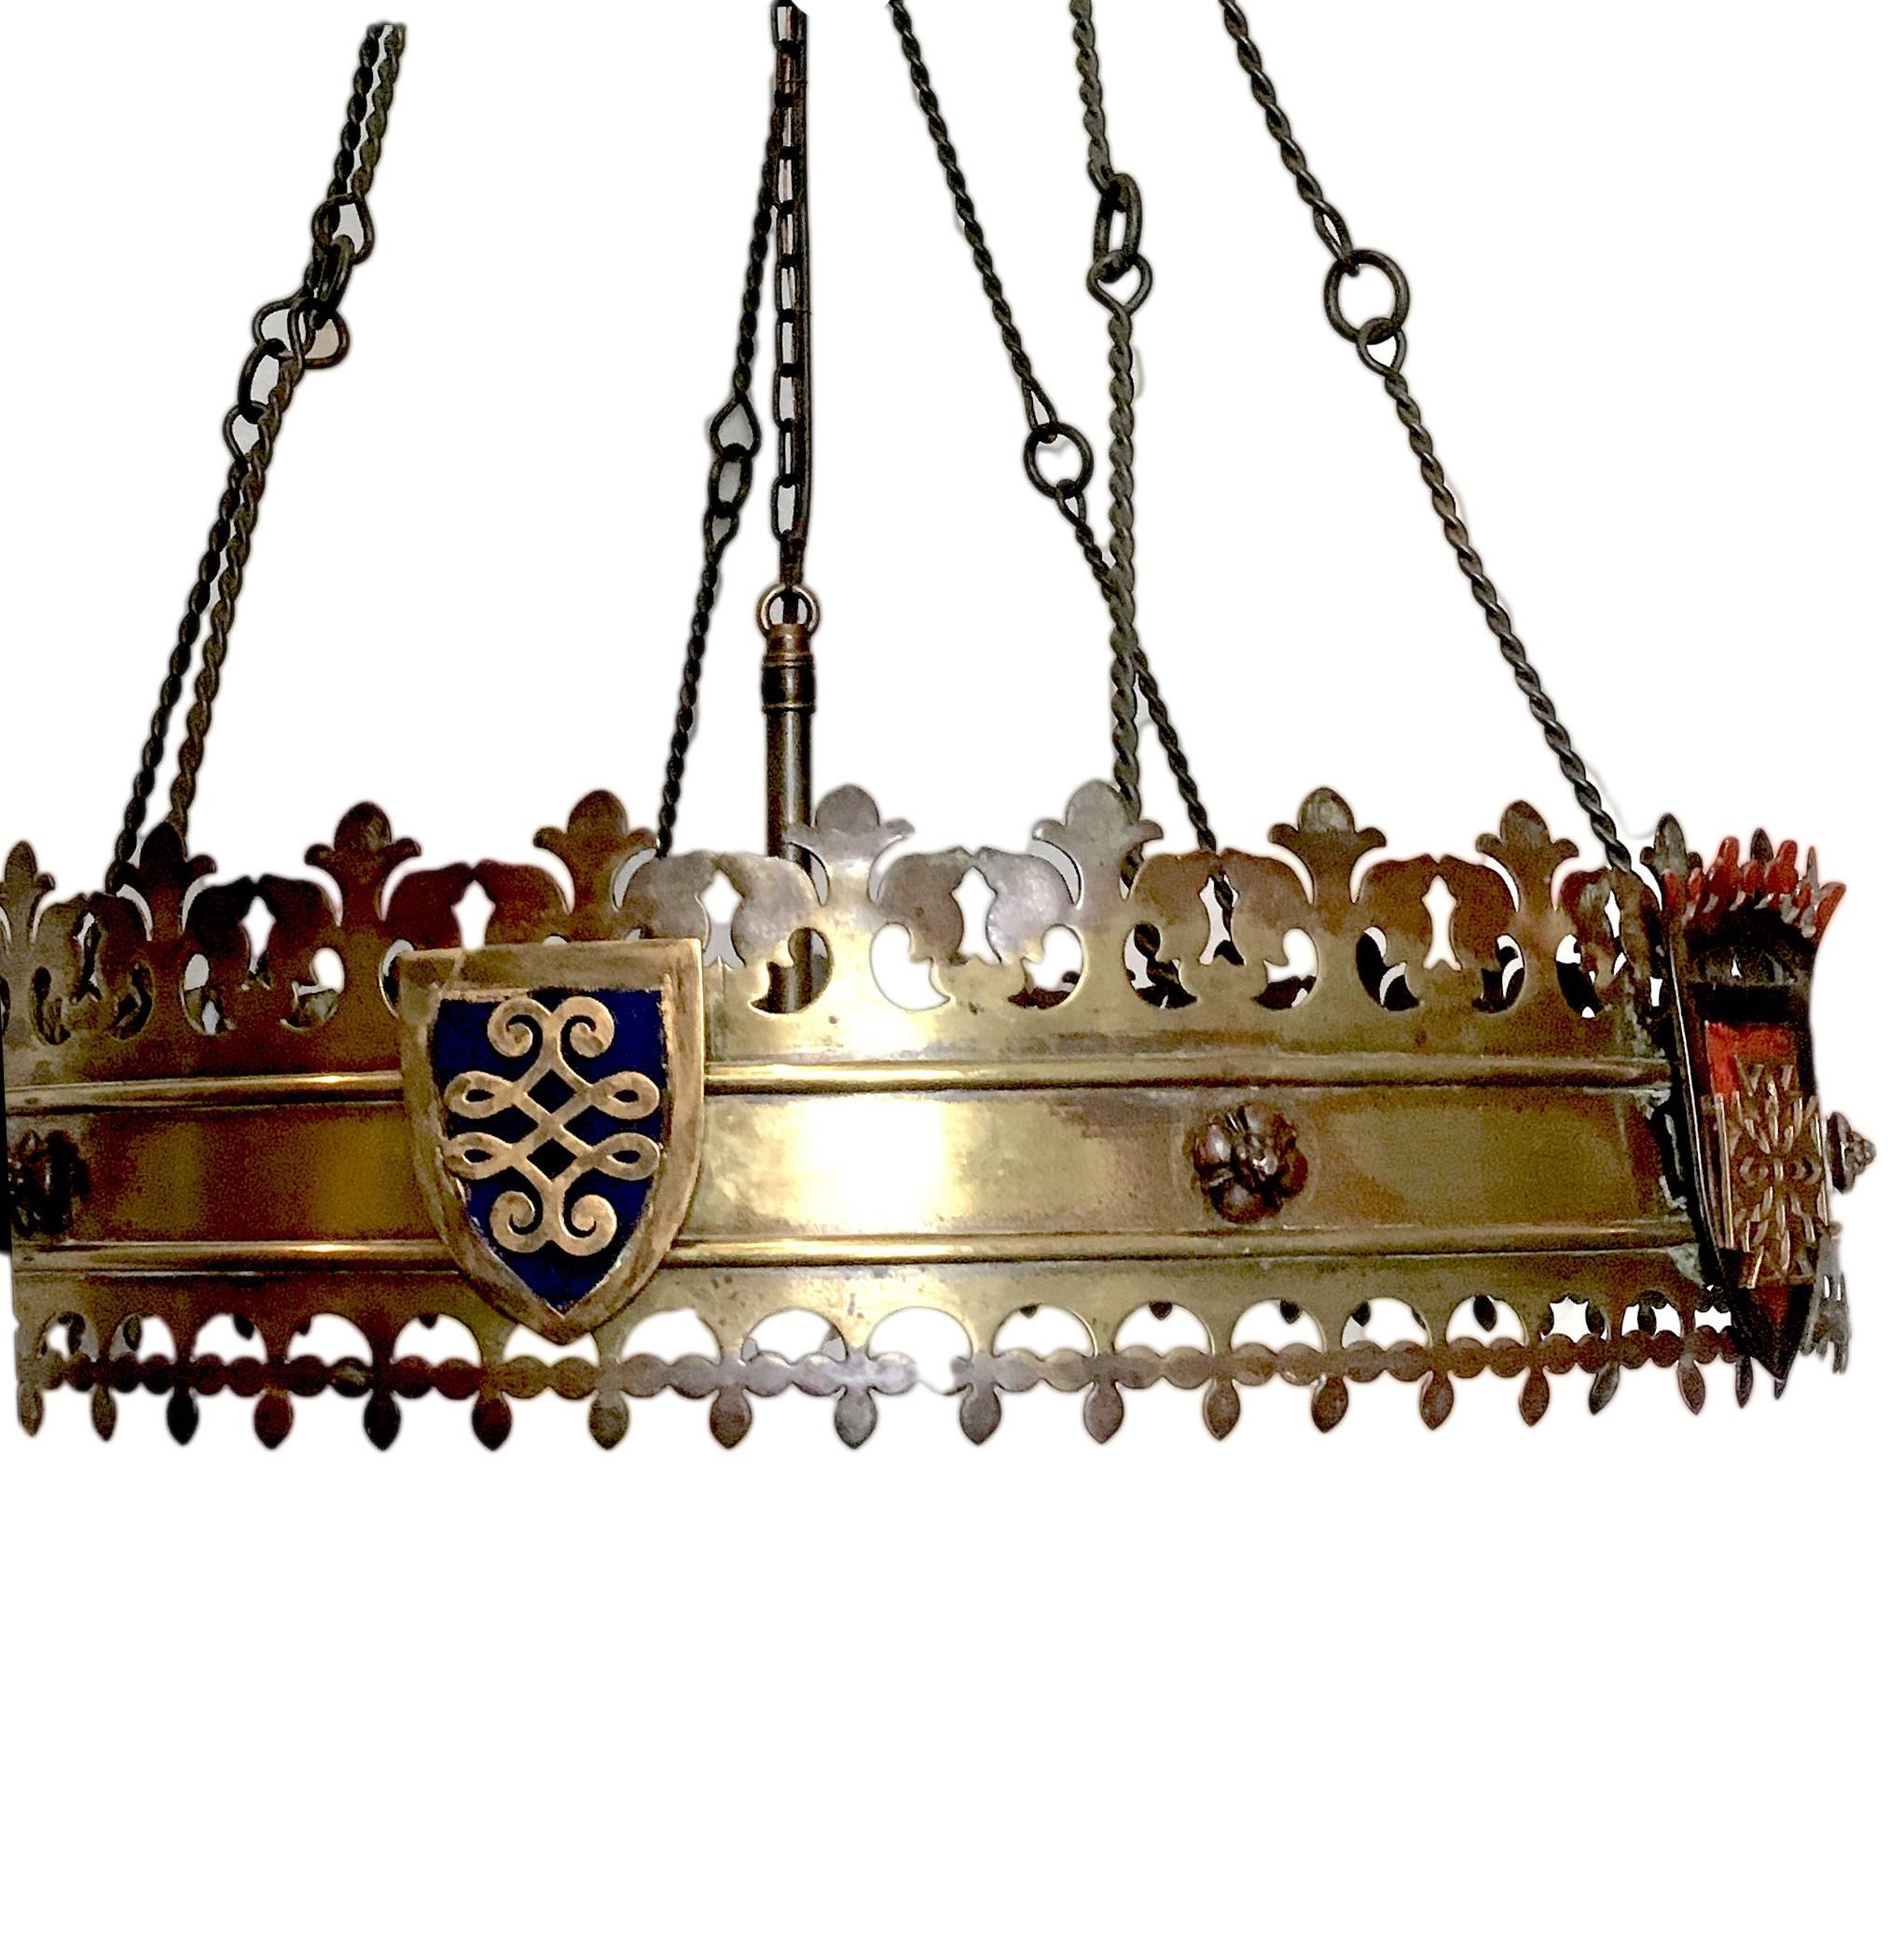 crown chandelier